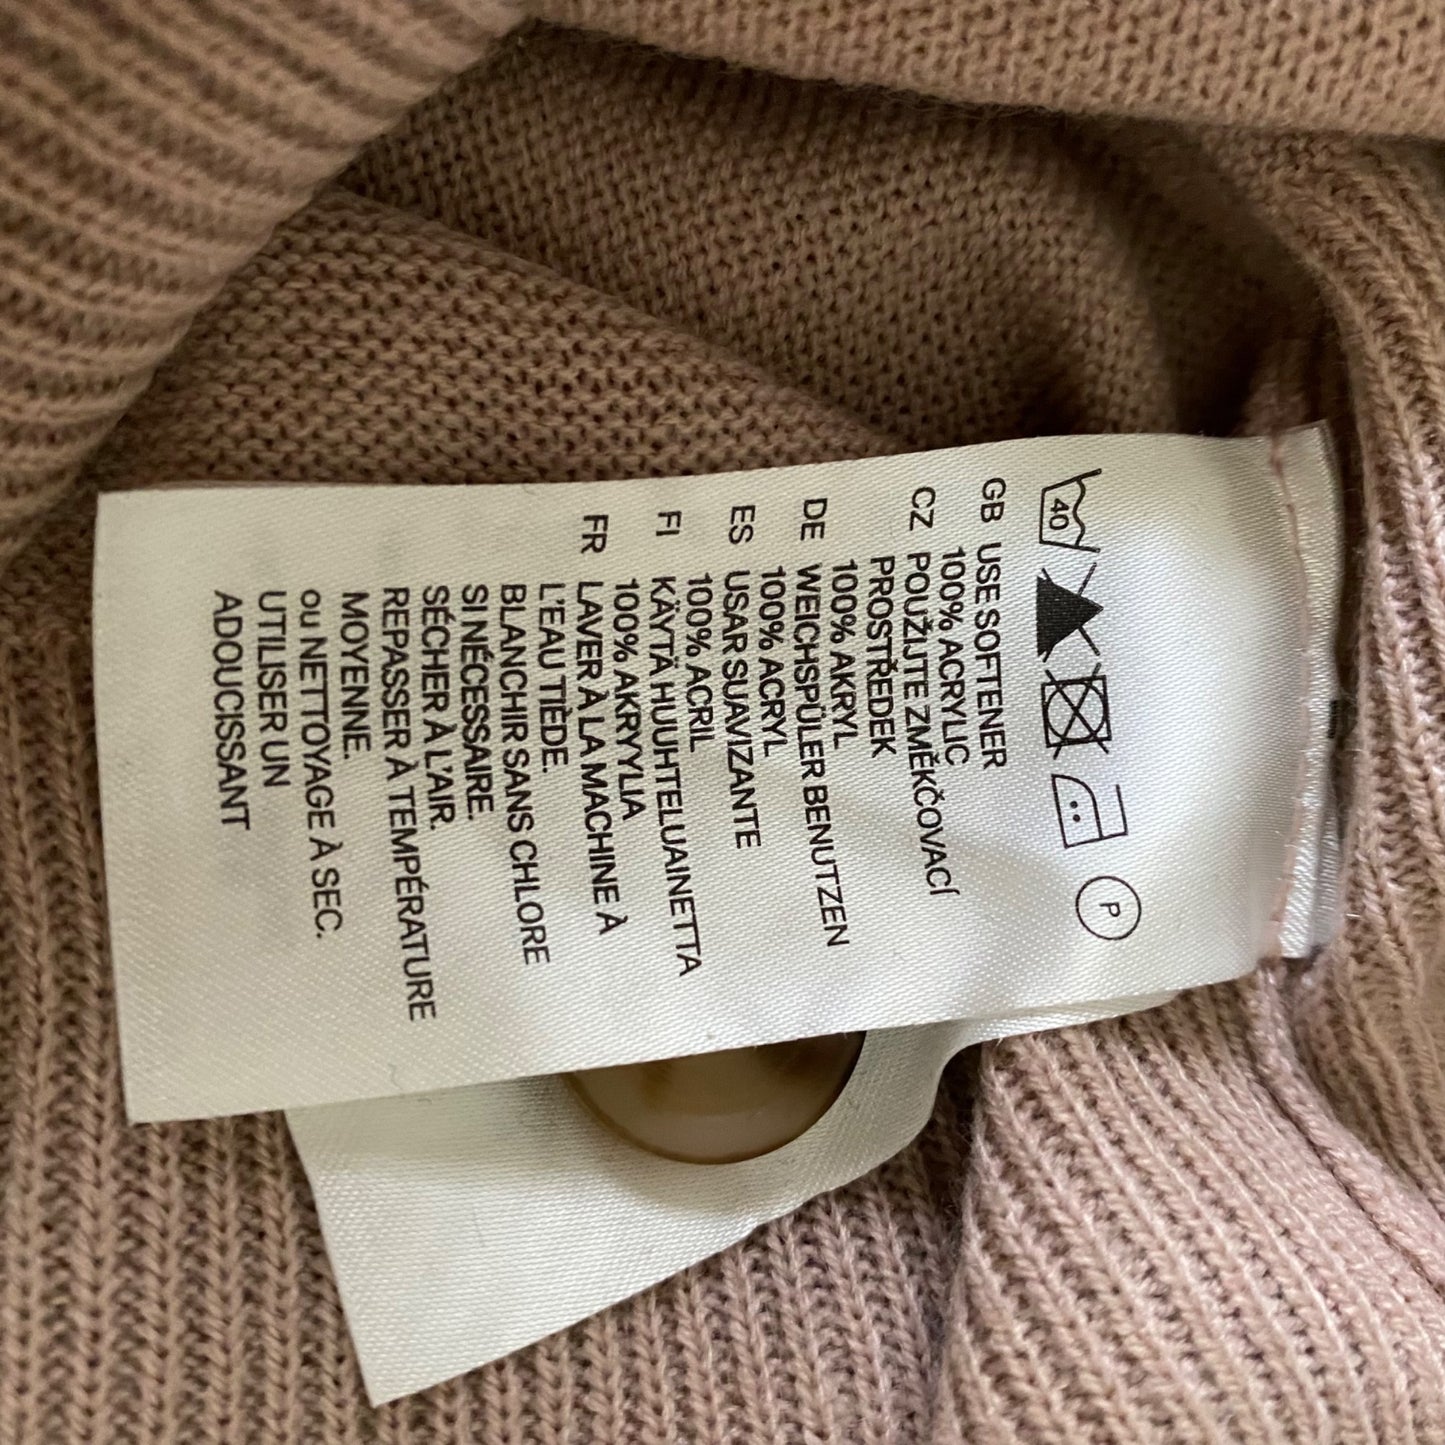 H&M sz S long sleeve v neck button cardigan sweater